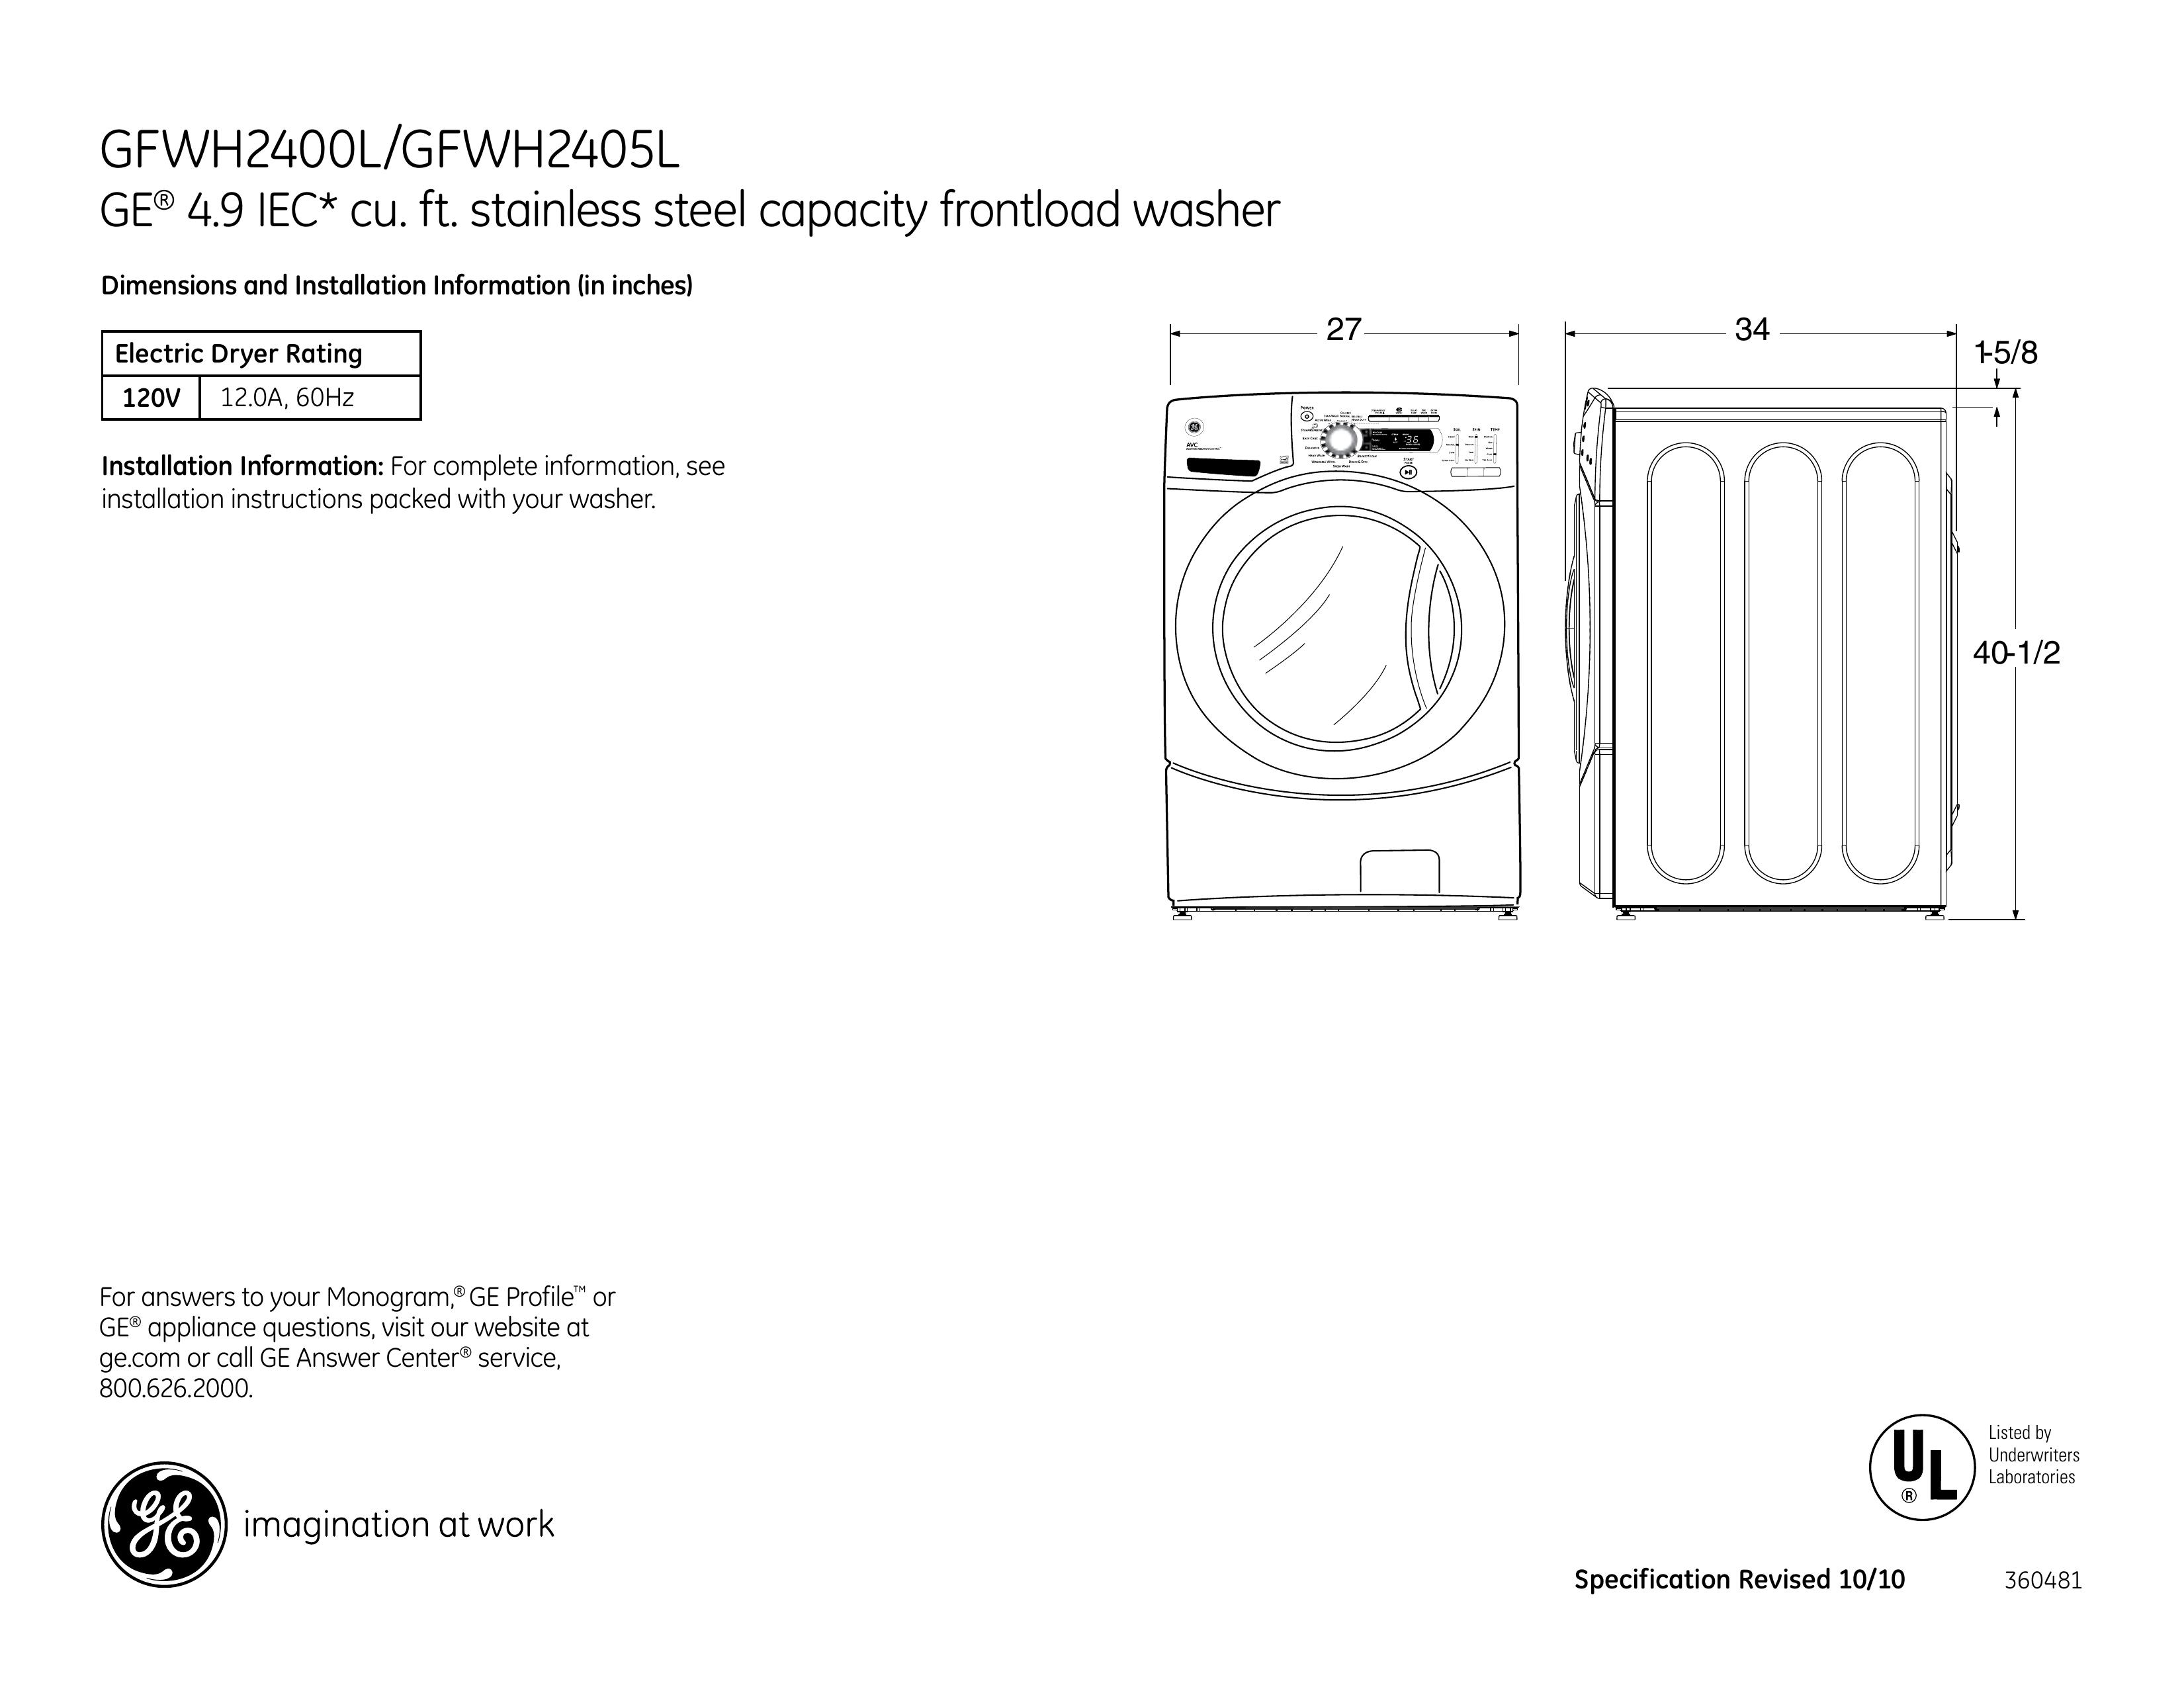 GE GFWH2400LWW Washer User Manual